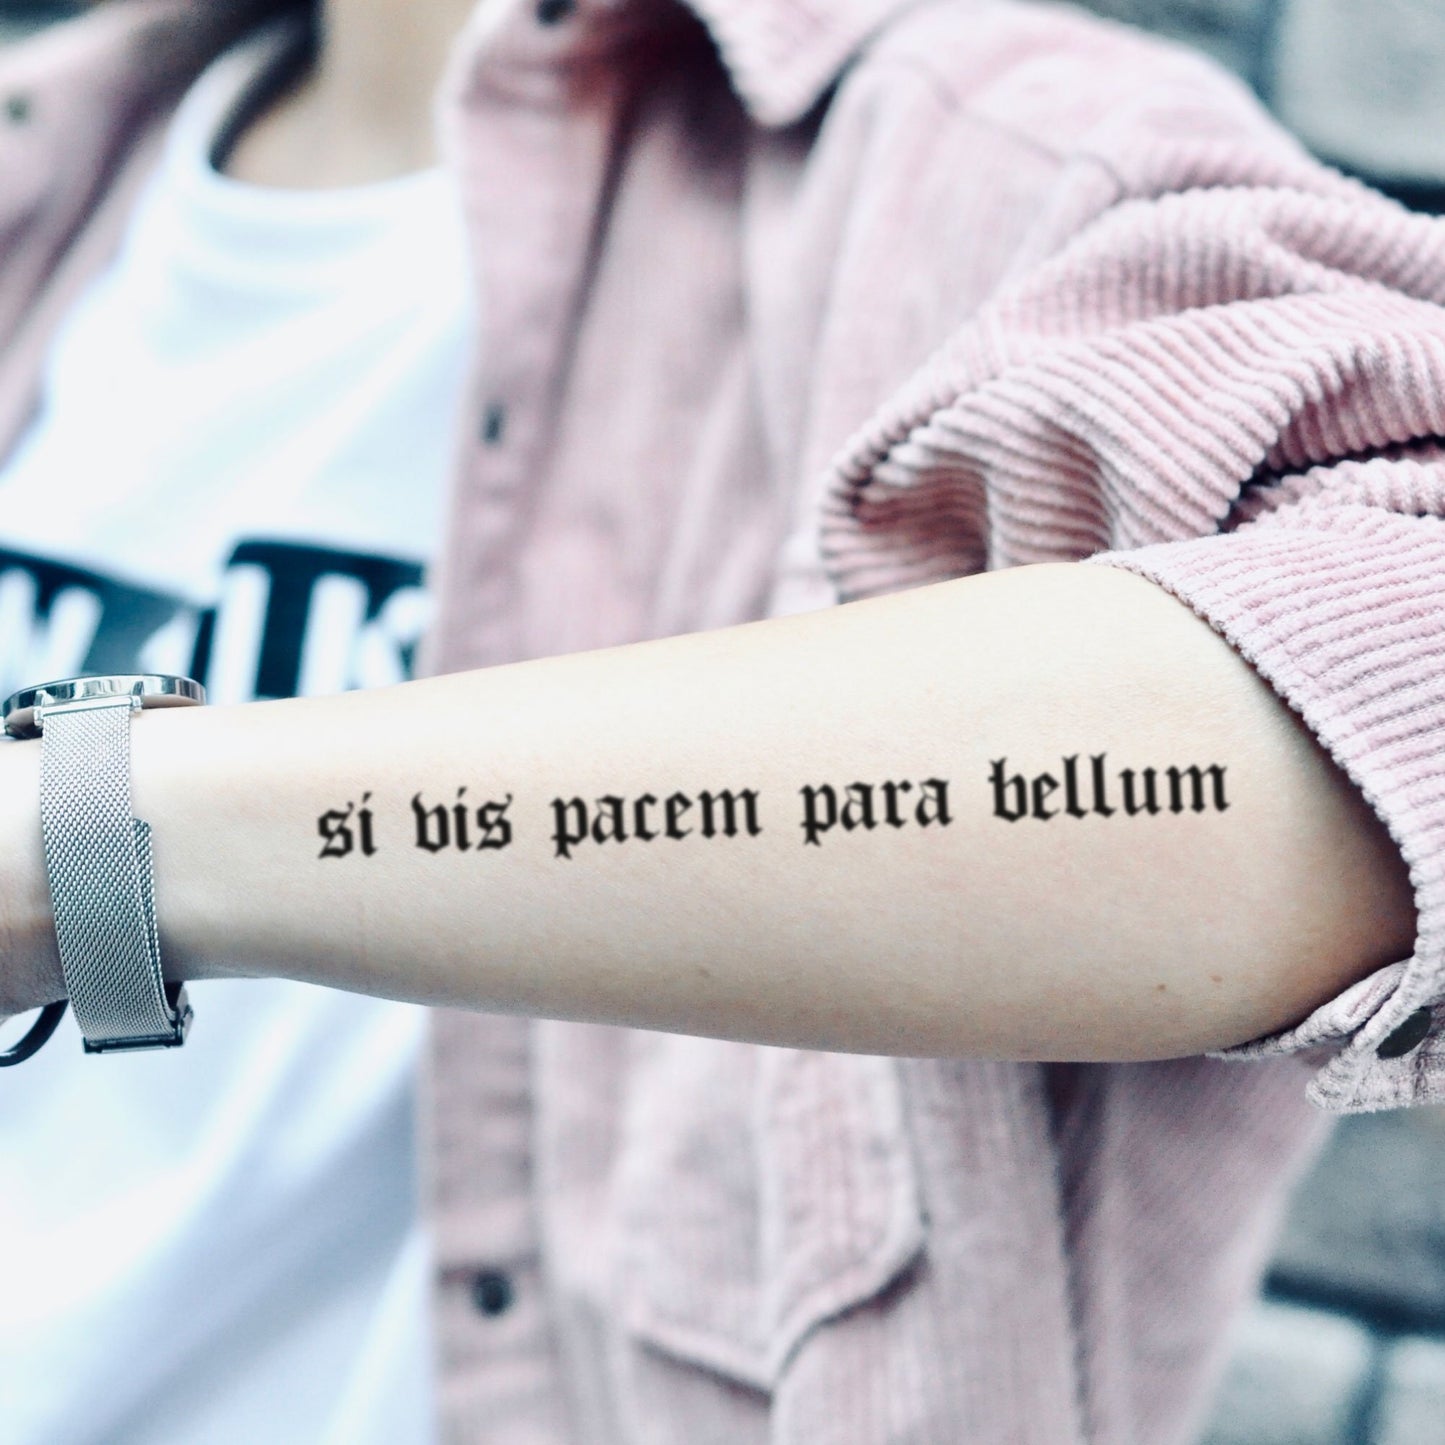 fake medium si vis pacem para bellum side arm lettering temporary tattoo sticker design idea on forearm